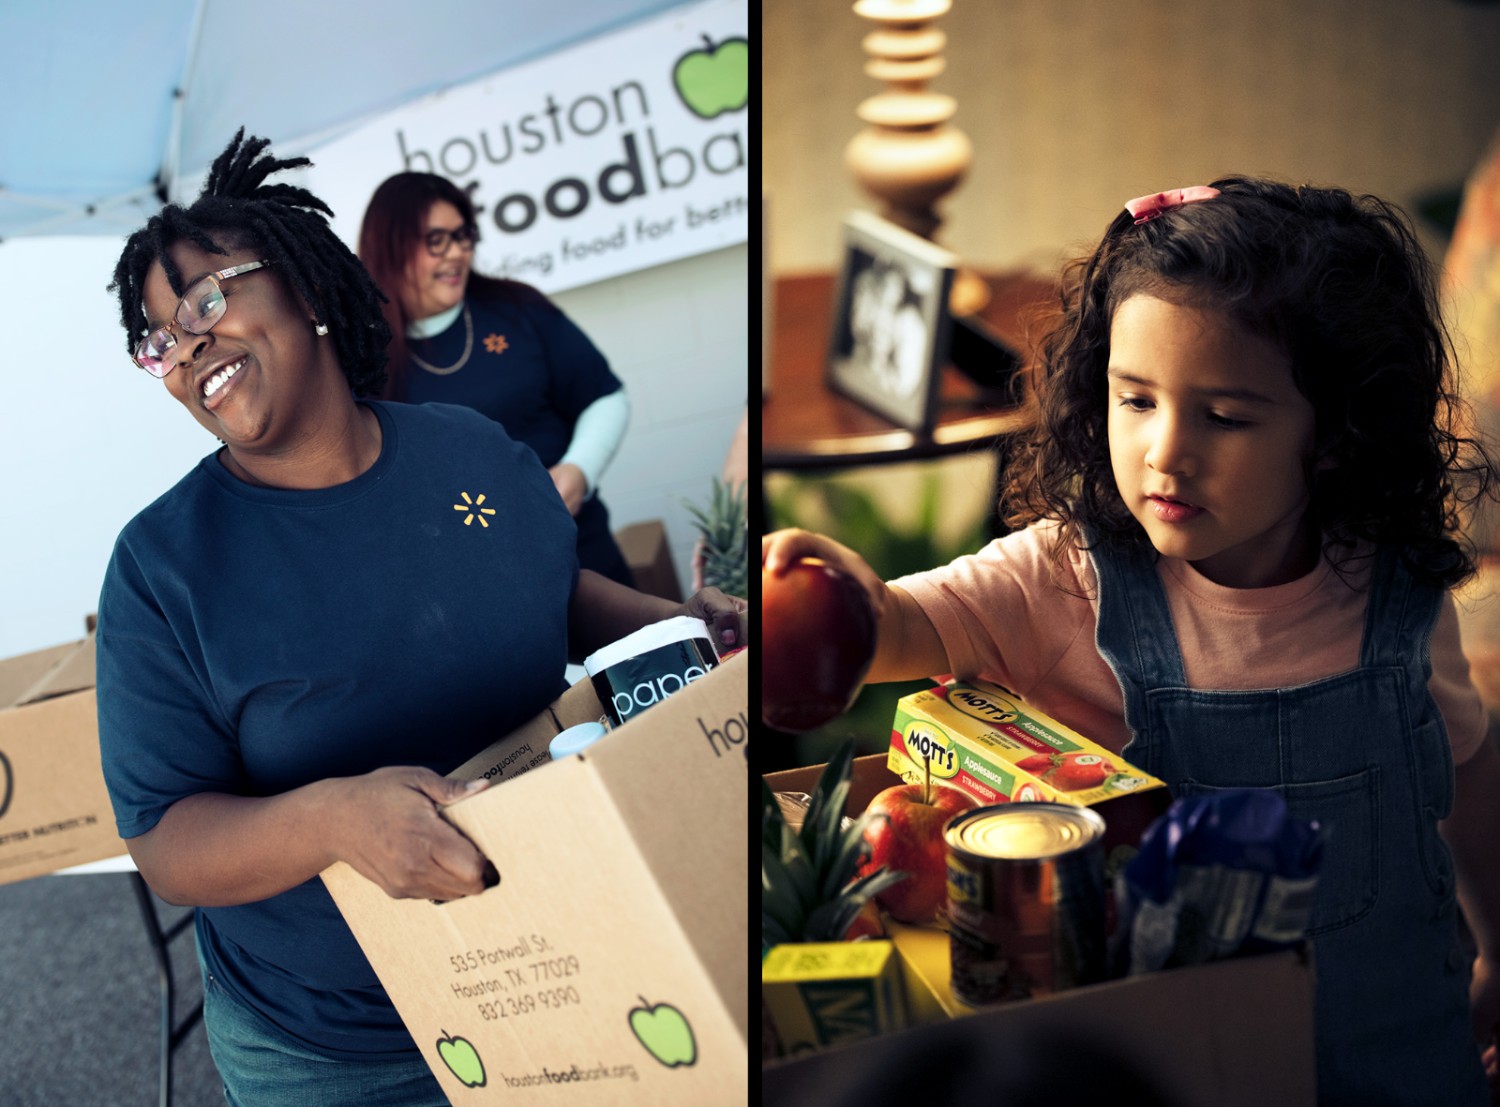 Bimbo Bakeries, Walmart join forces for Fight Hunger. Spark Change